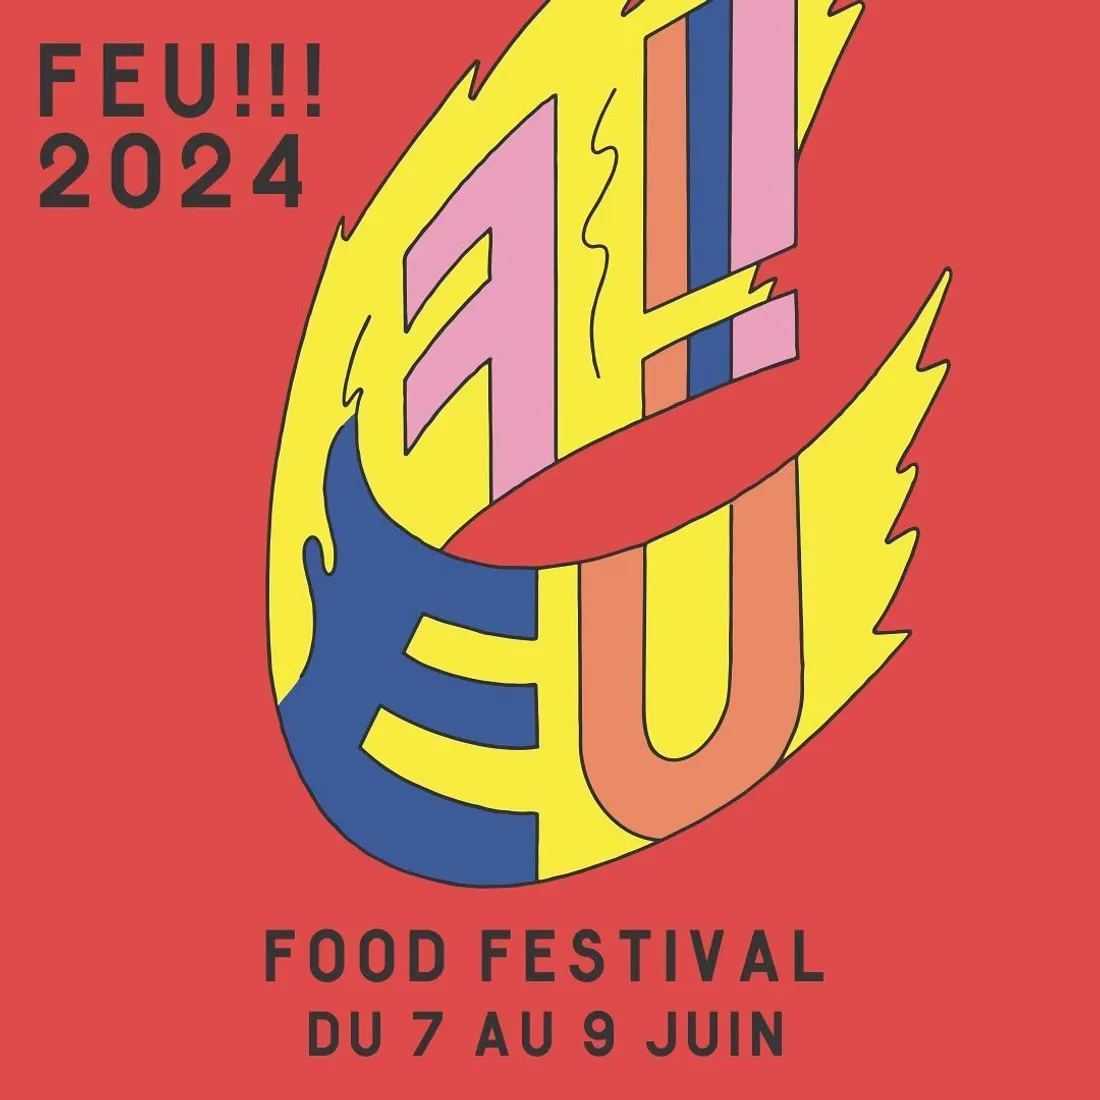 Le festival culinaire Feu !!! s'installe à Grand Scène